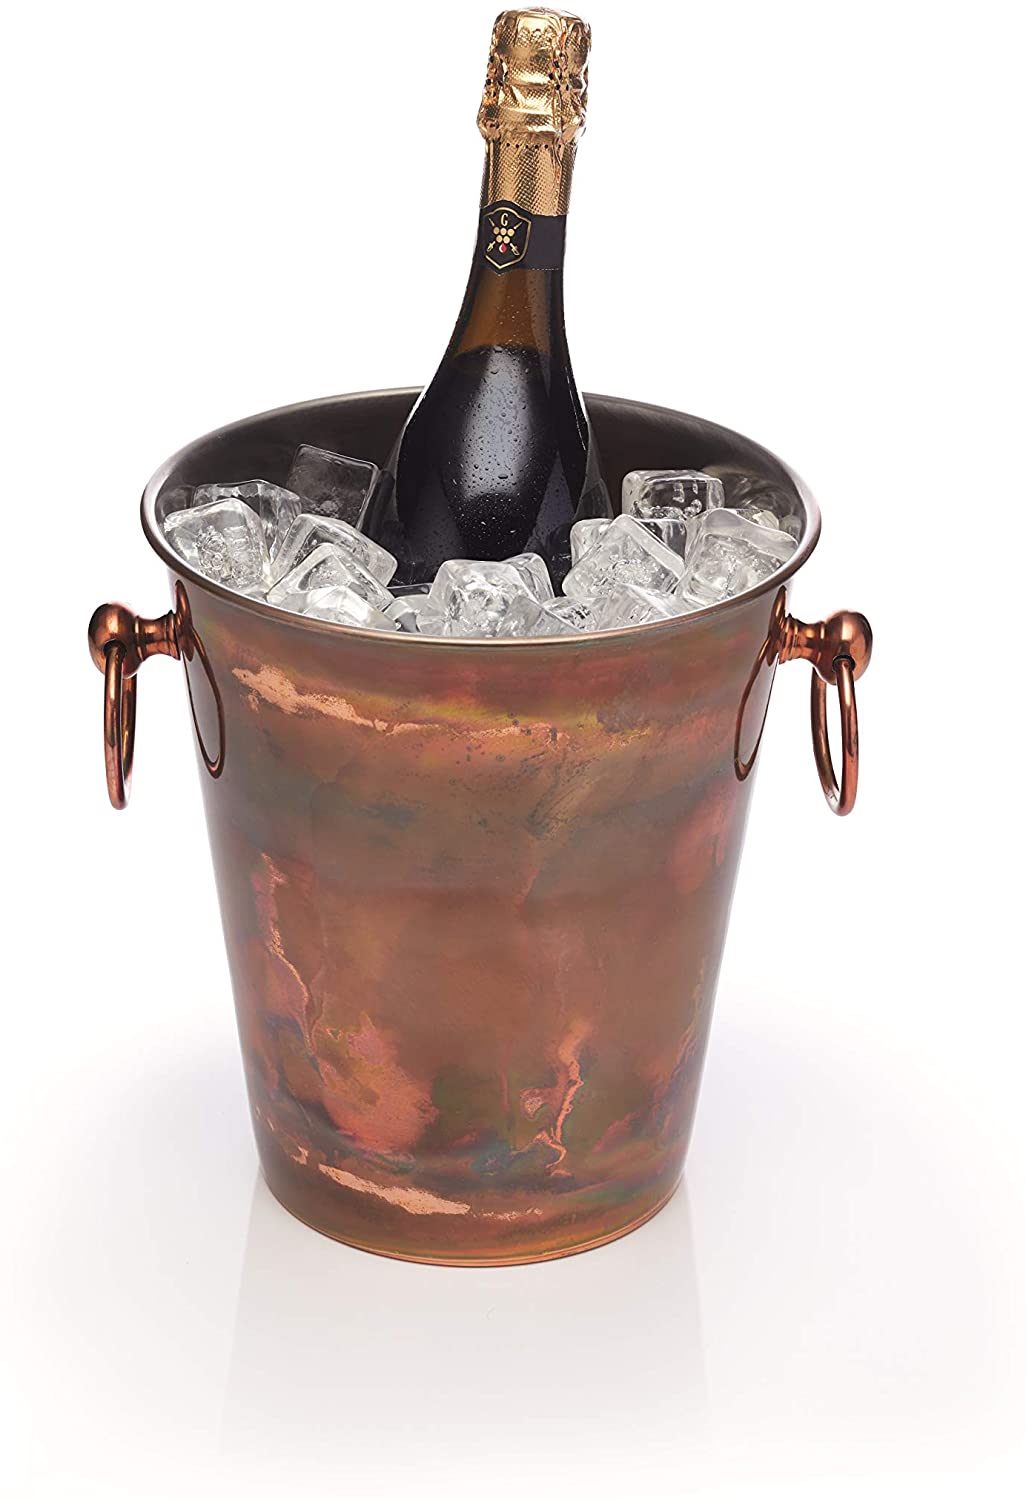 KitchenCraft BarCraft Luxury Stainless Steel Wine Champagne Cooler Bucket 24 x 20.5 x 23cm - Iridescent Copper Finish